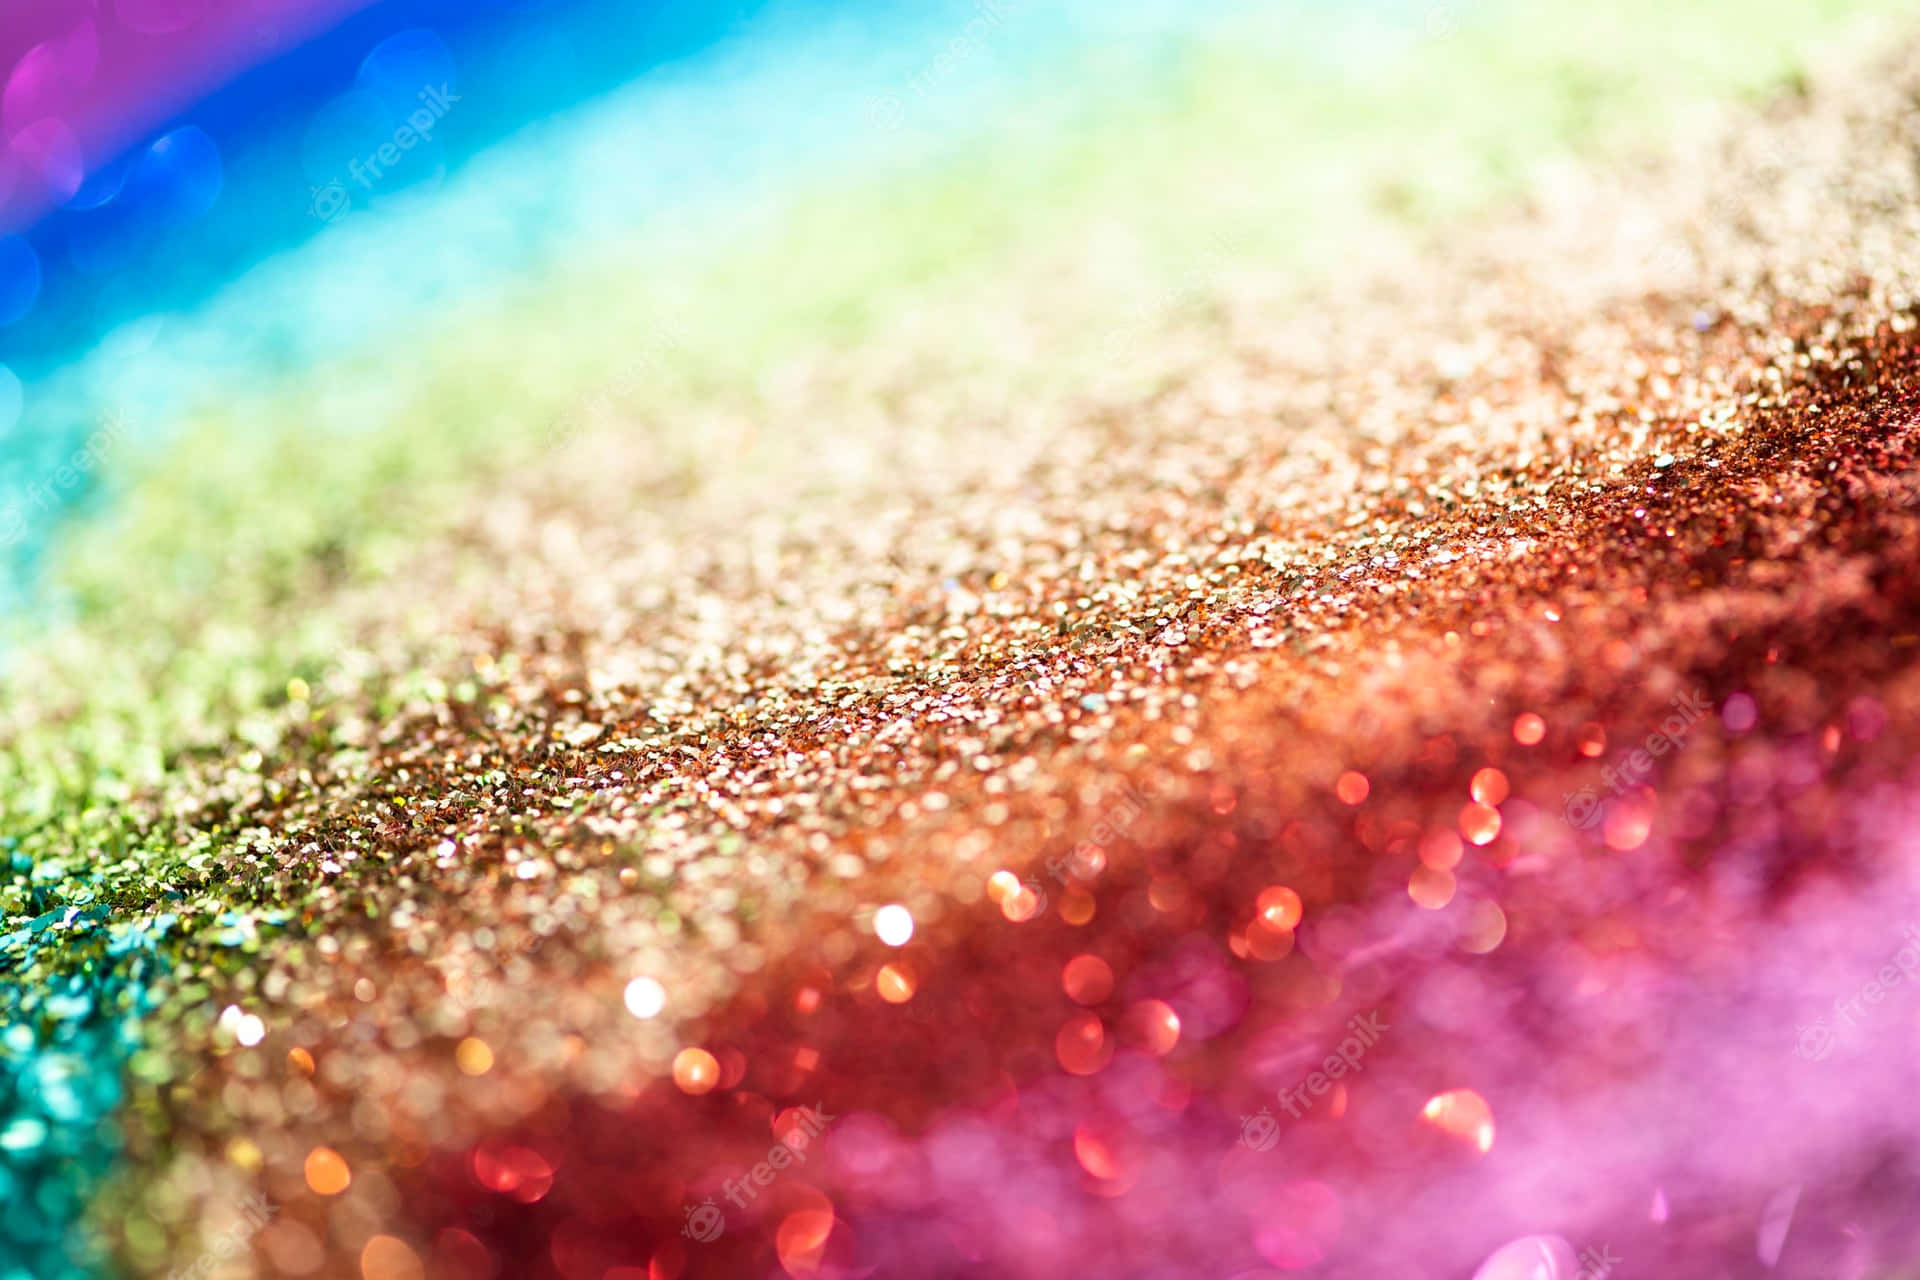 100+] Rainbow Glitter Backgrounds